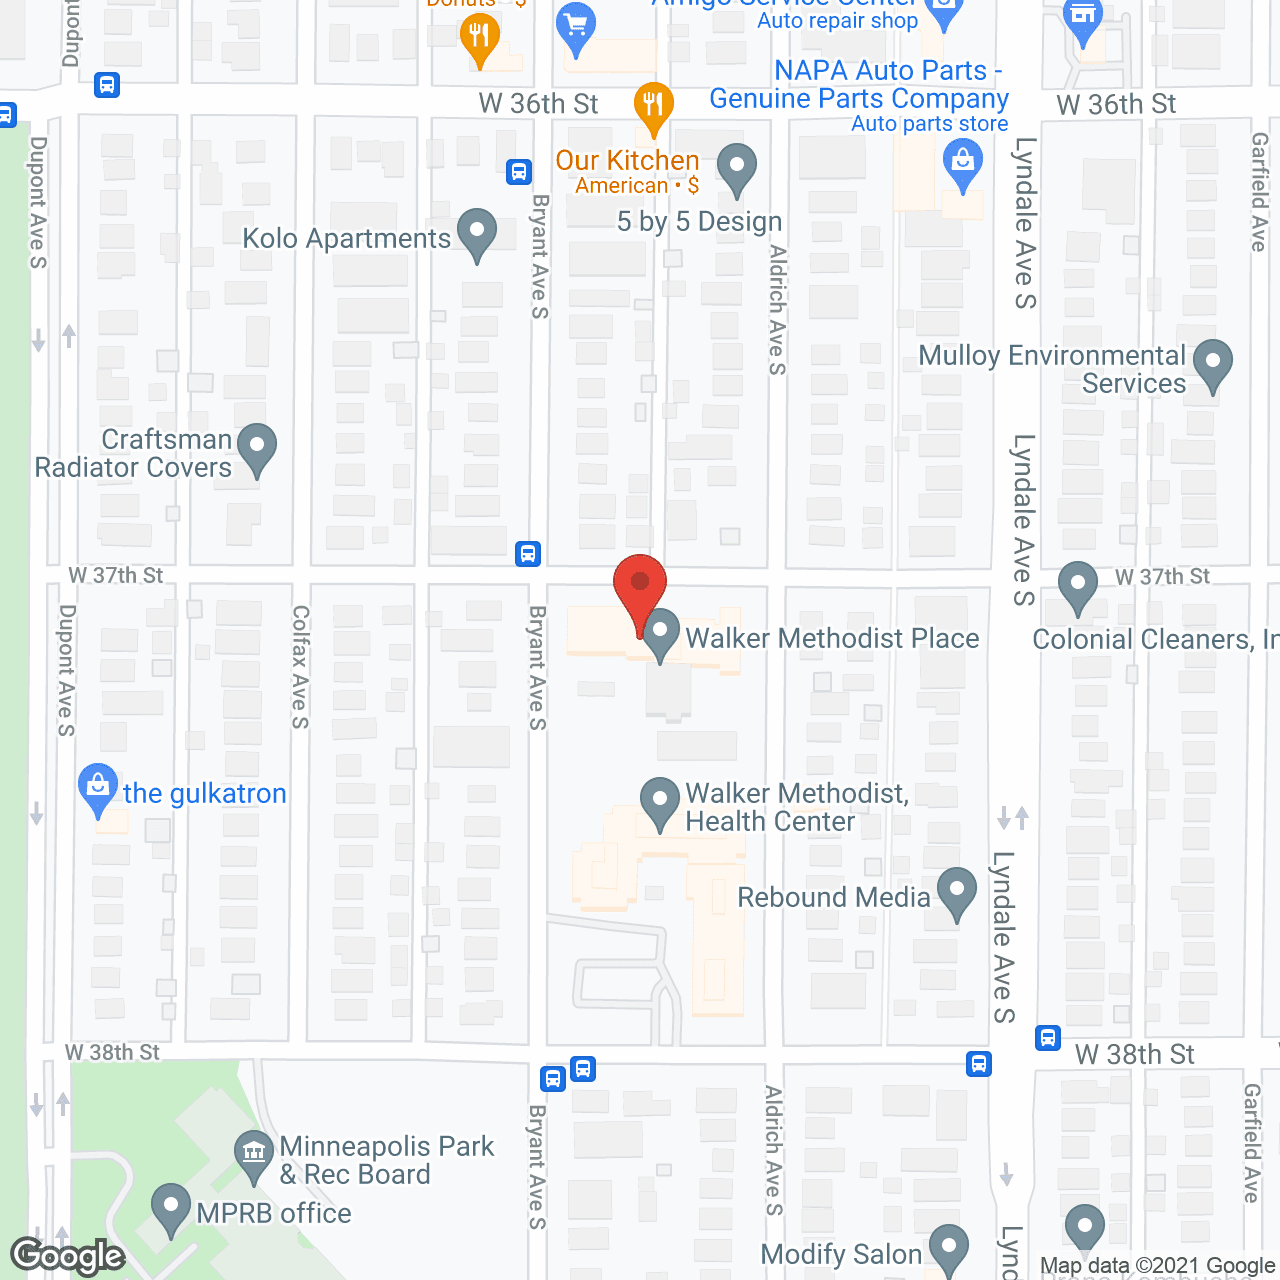 Walker Methodist Place in google map